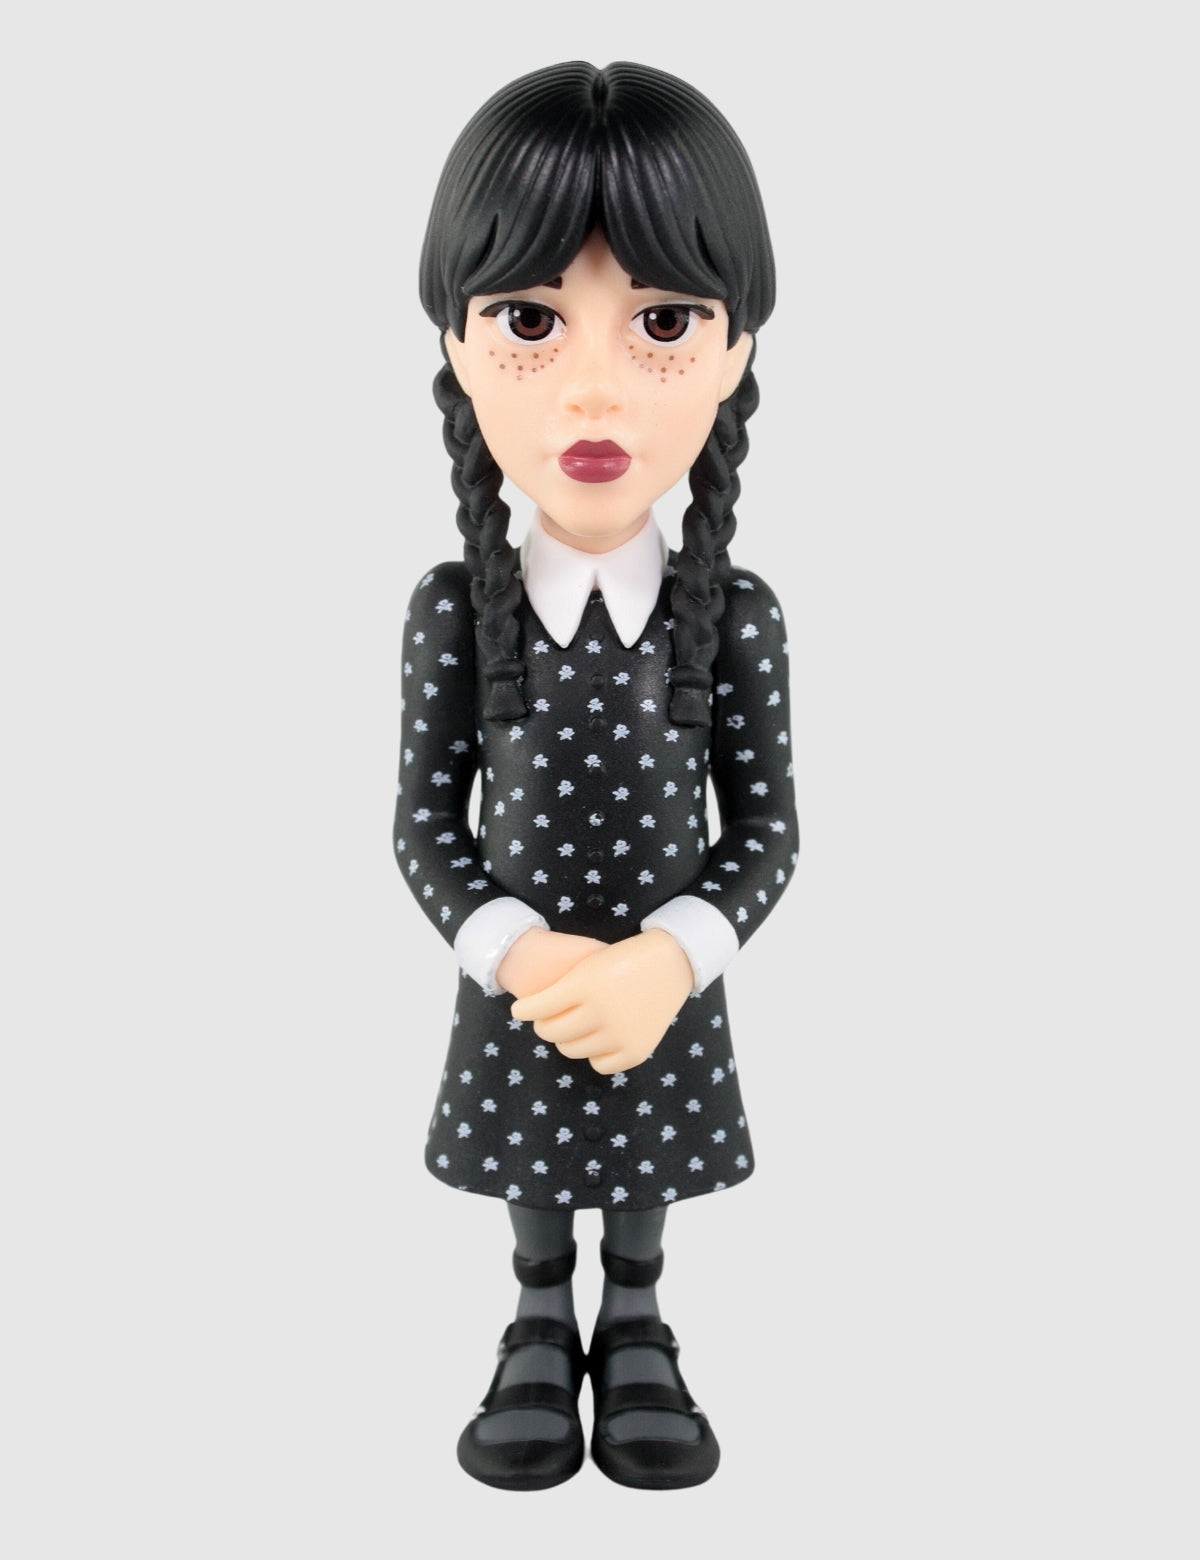 Minix W1 - Figurine Mercredi Addams